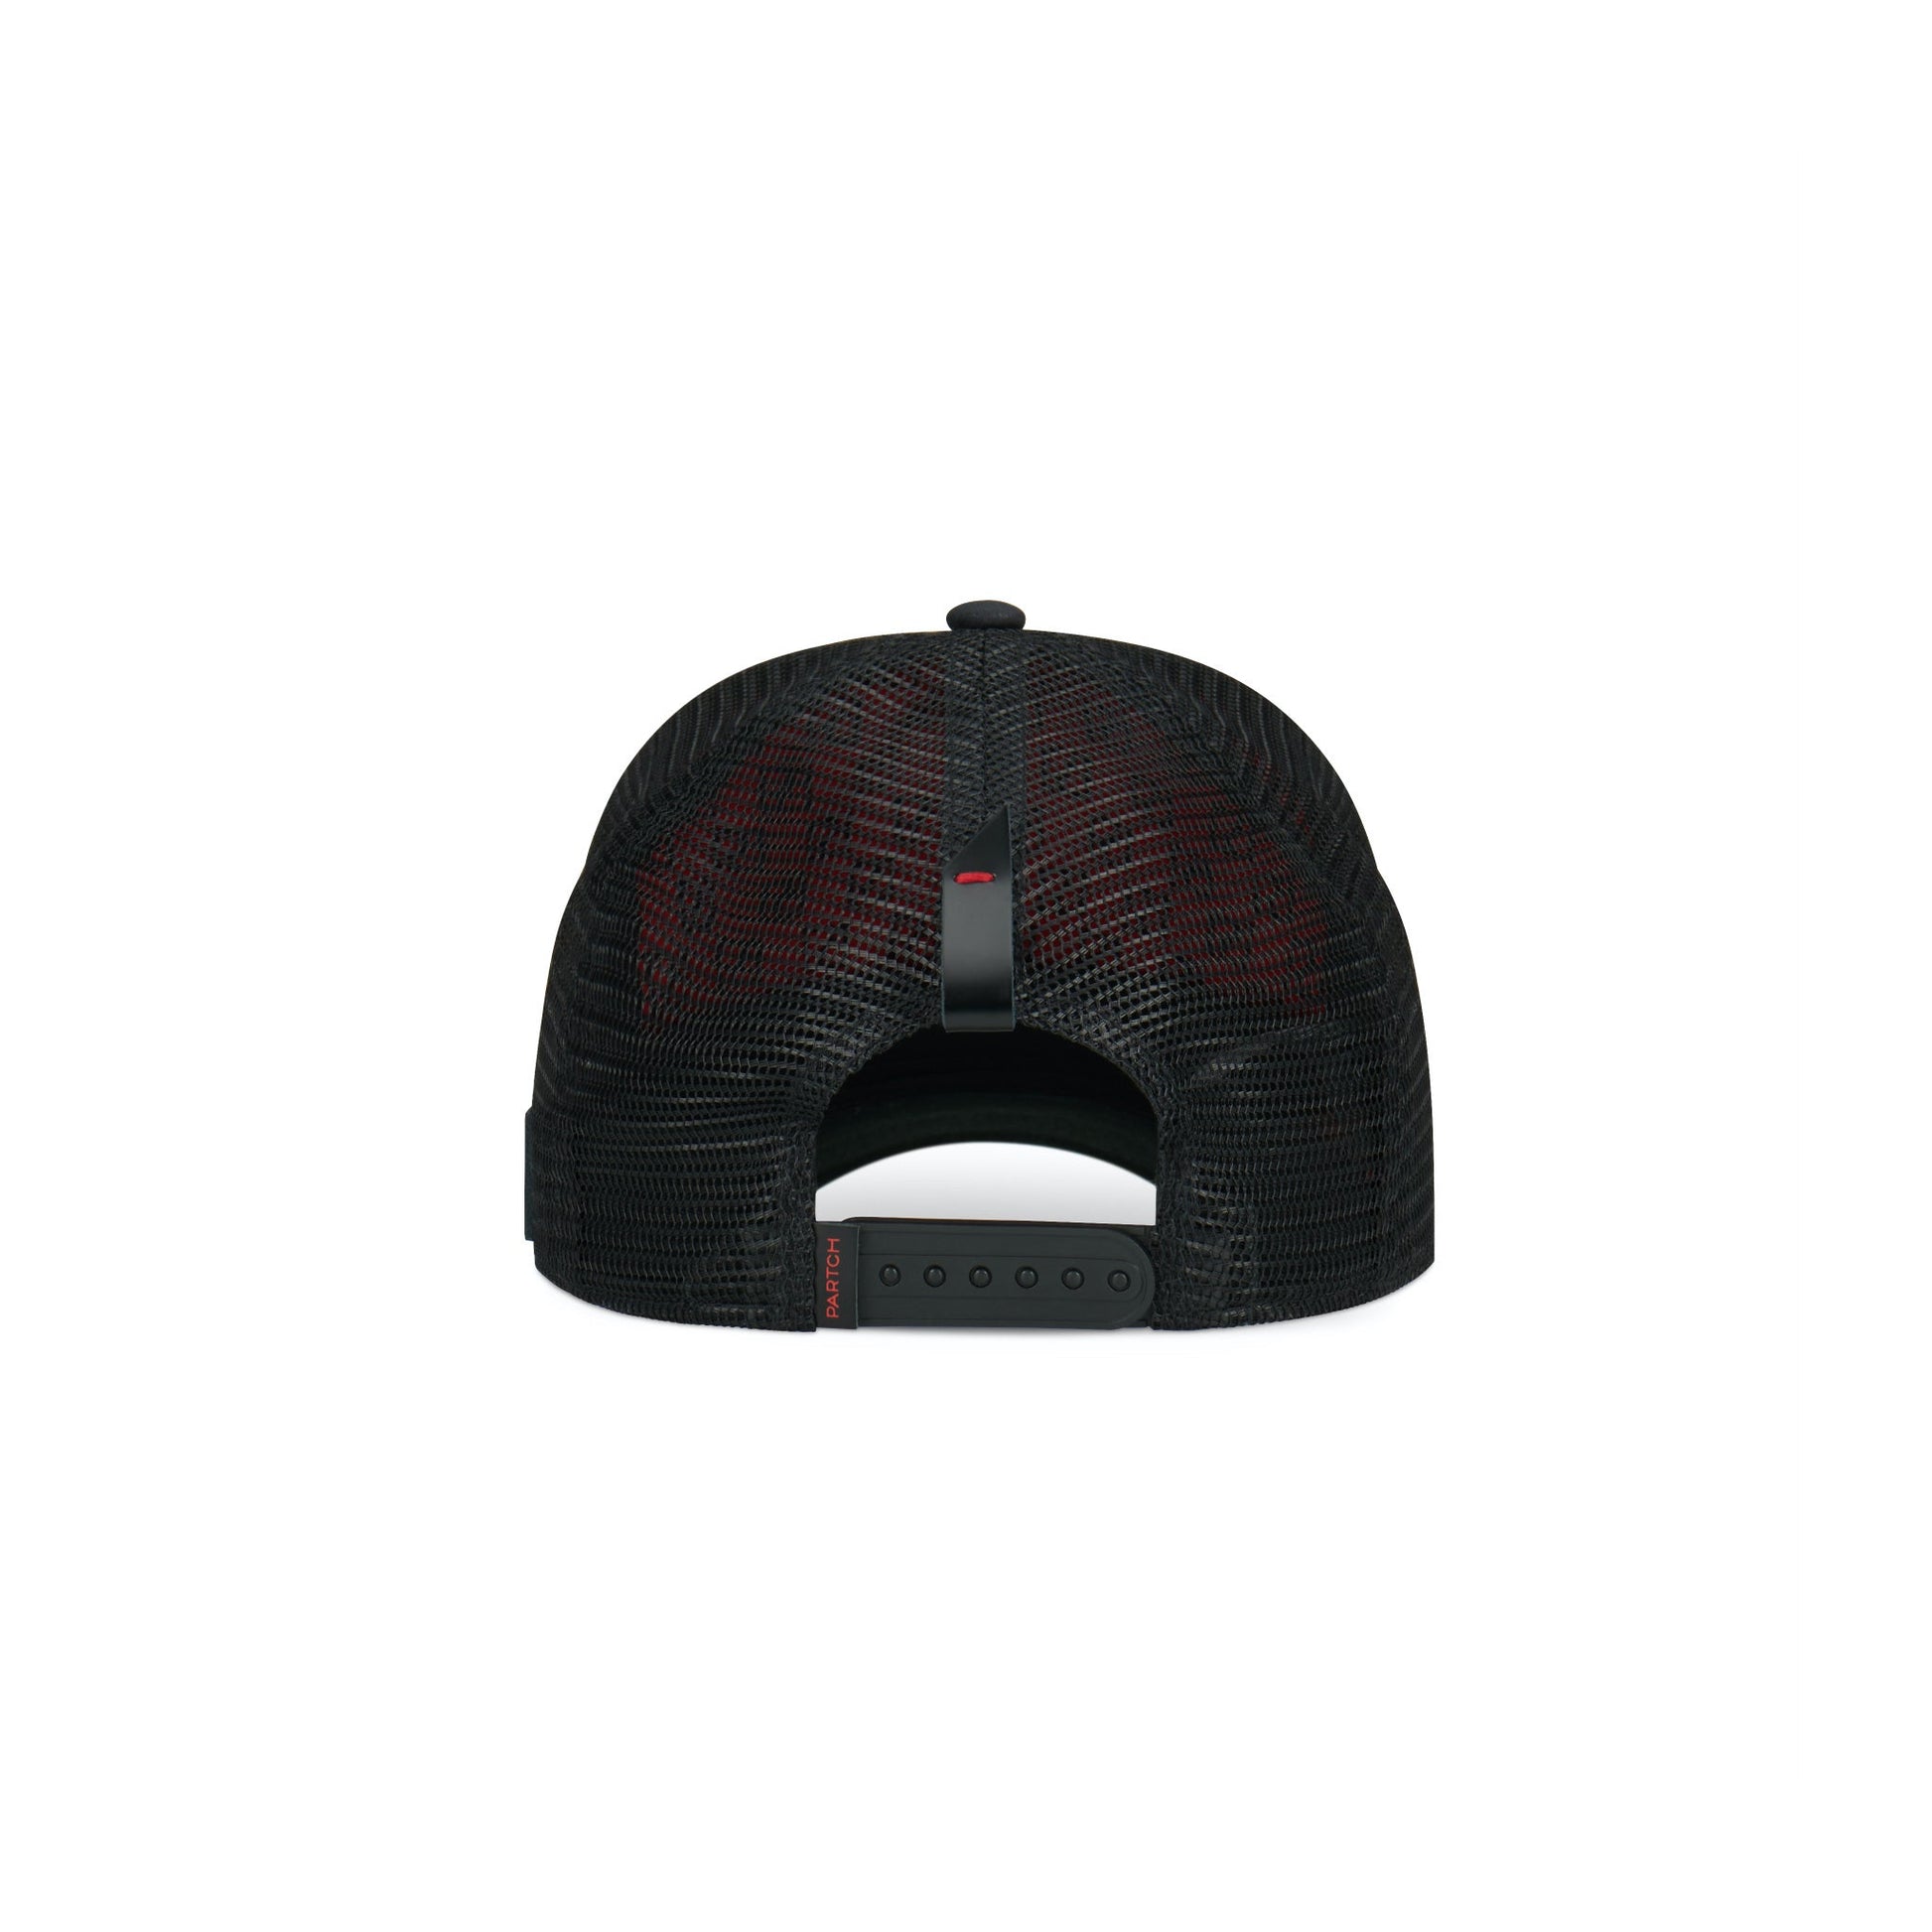 Partch Black hat by Didier Devaux High Fashion headwear made in Miami